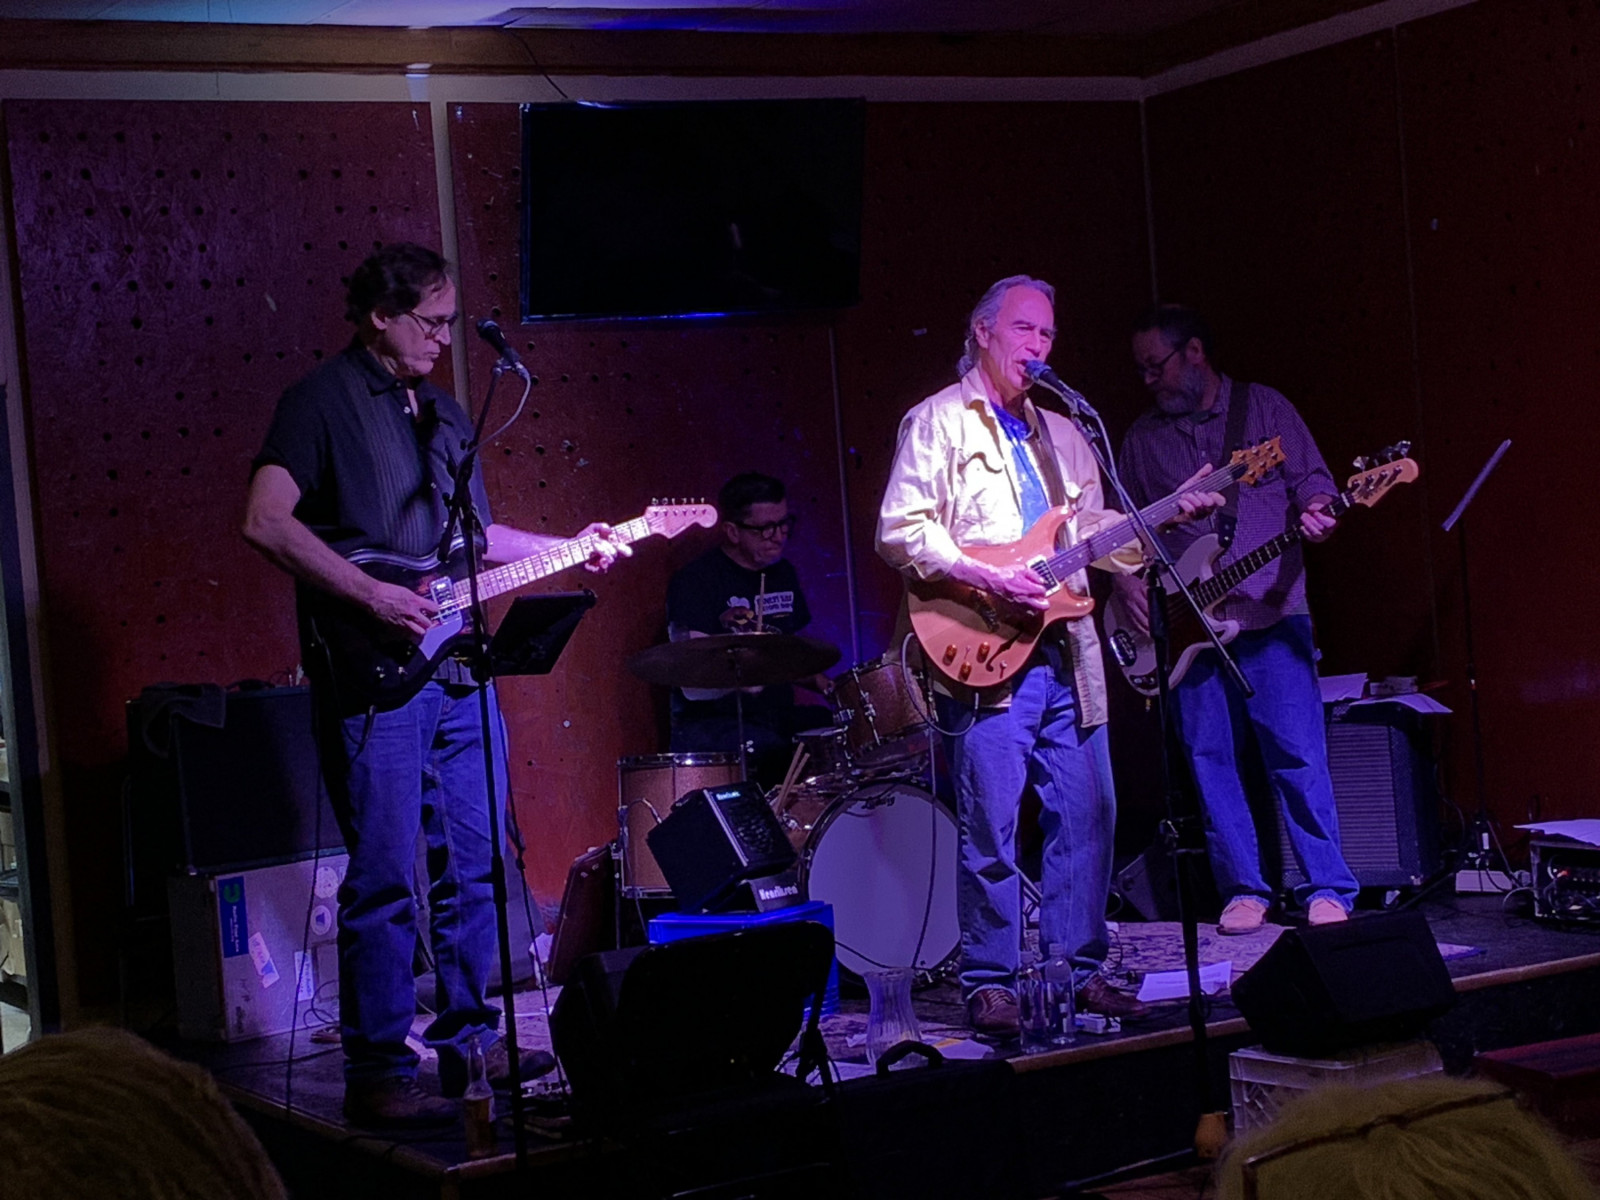 Joe Uehlein and his band perform on stage under purple lighting.